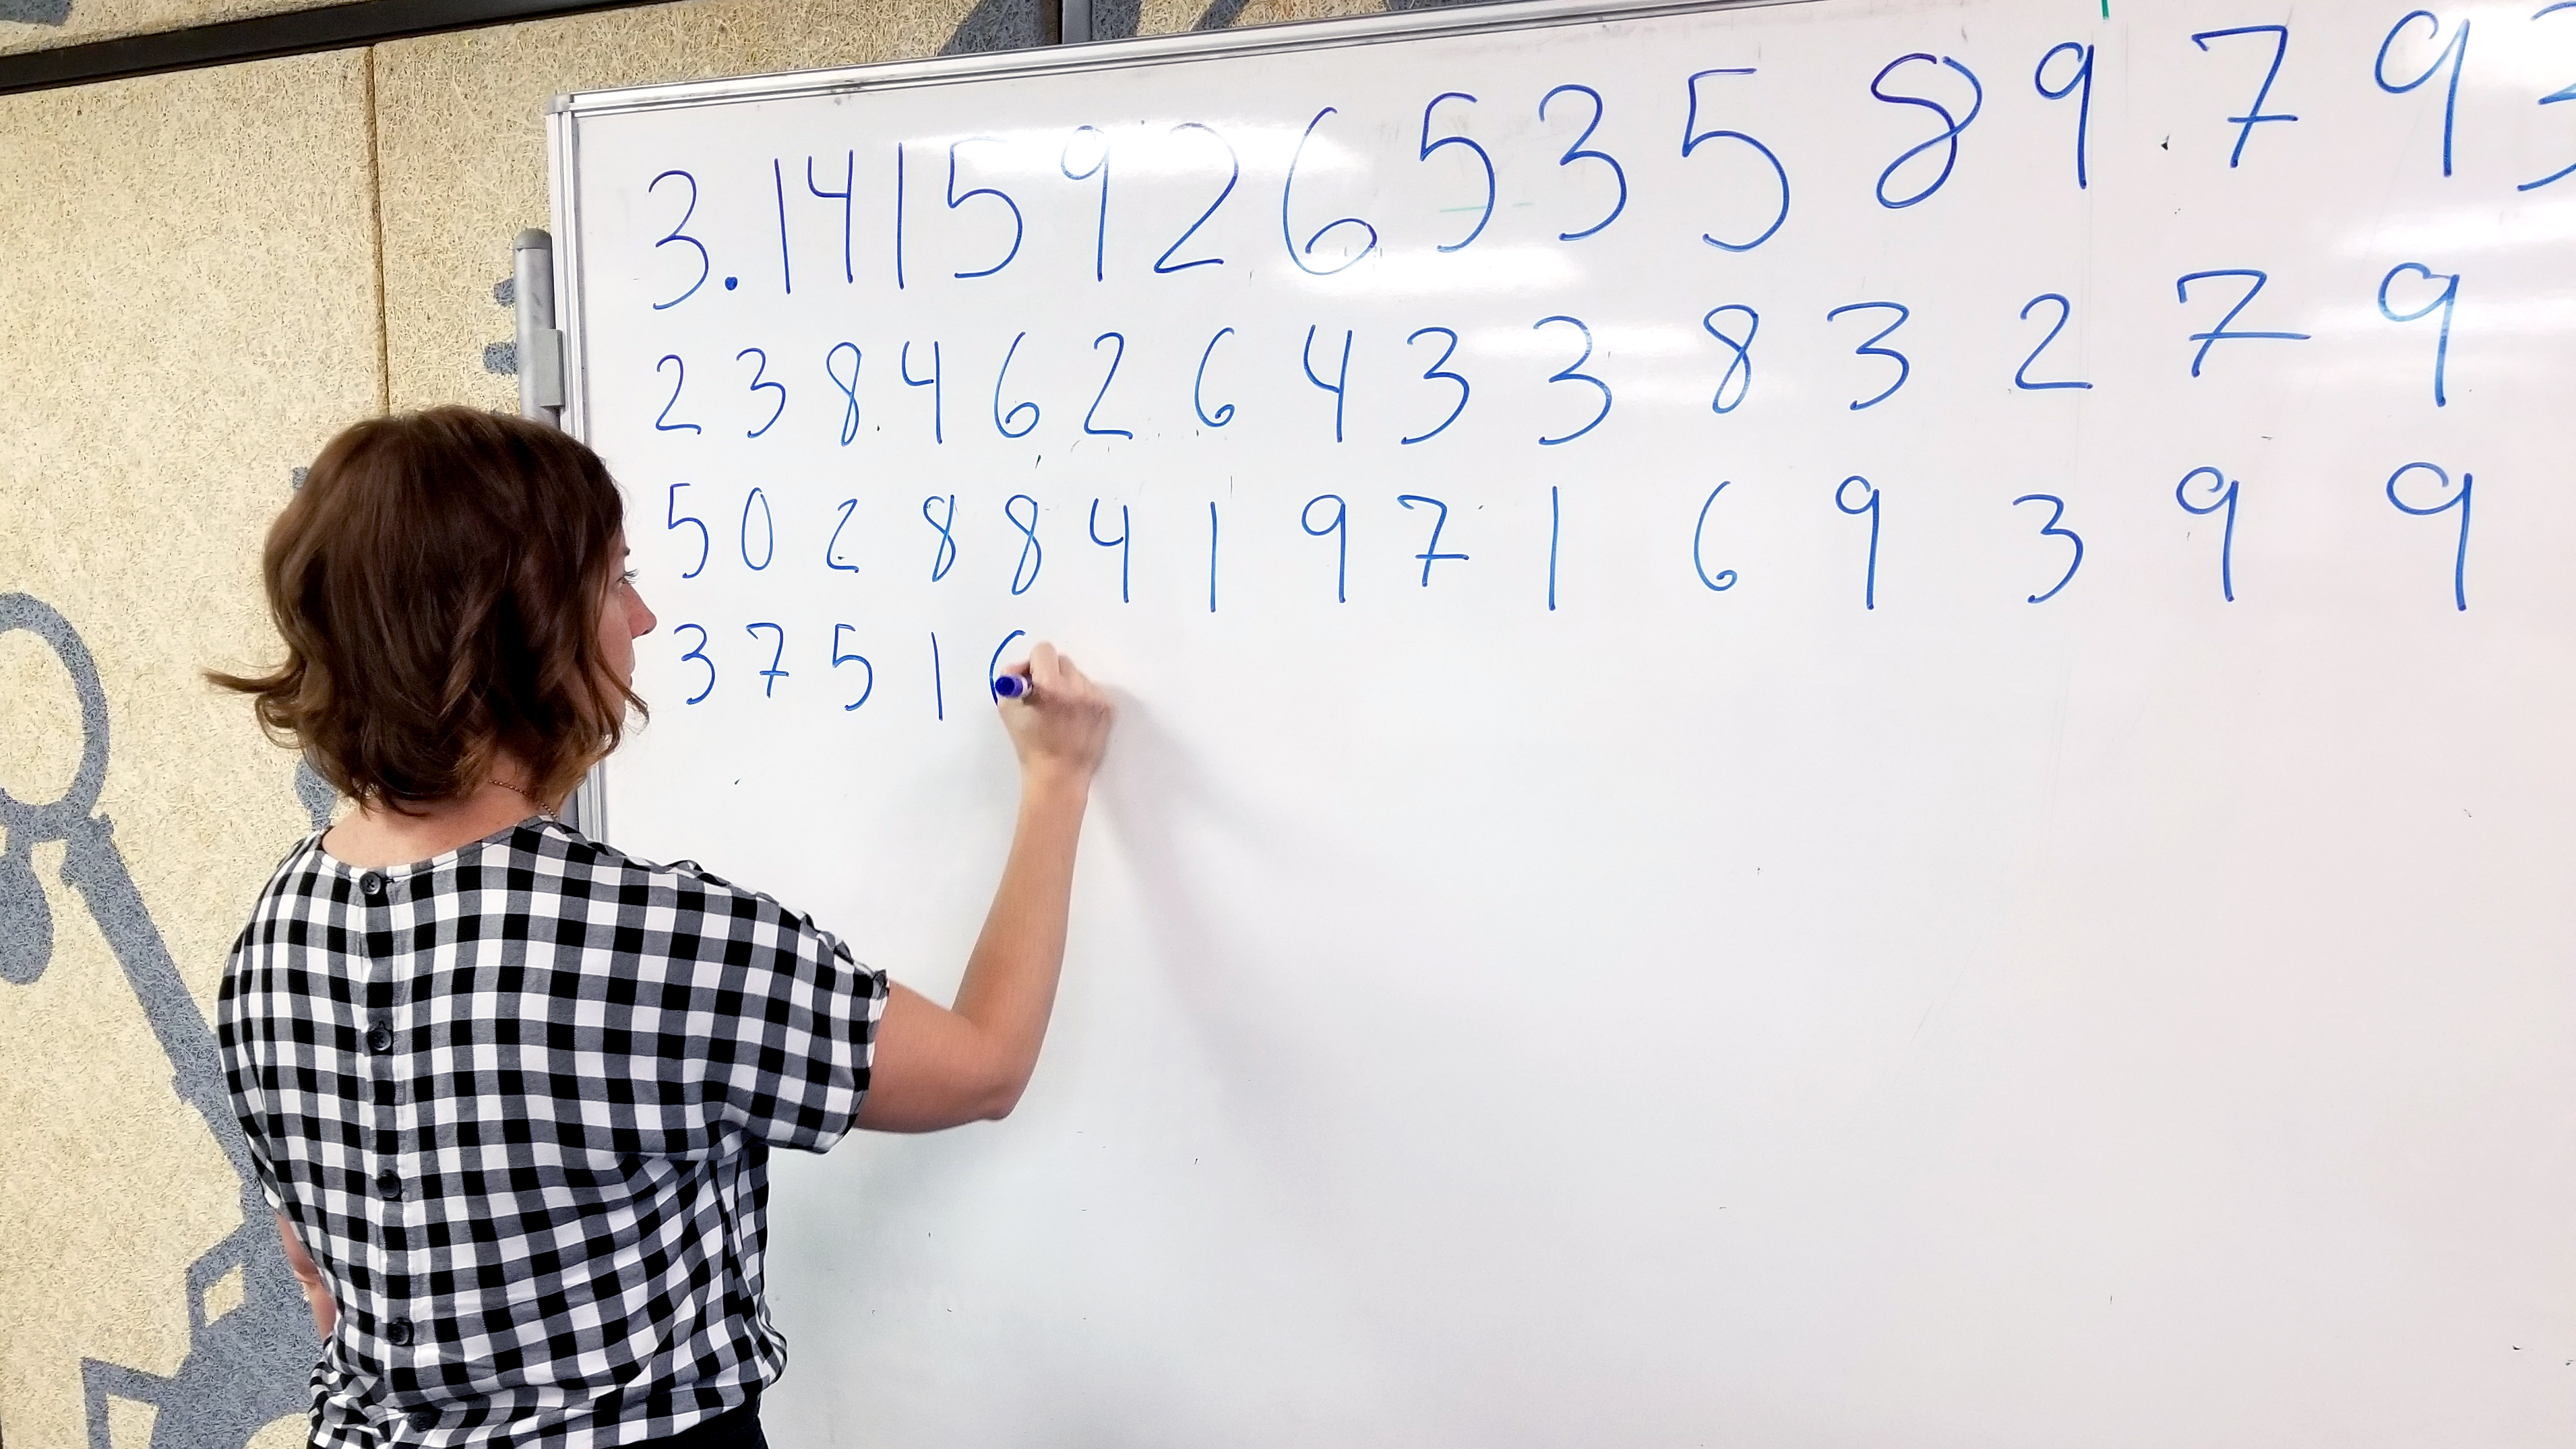 Woman writing Pi on whiteboard